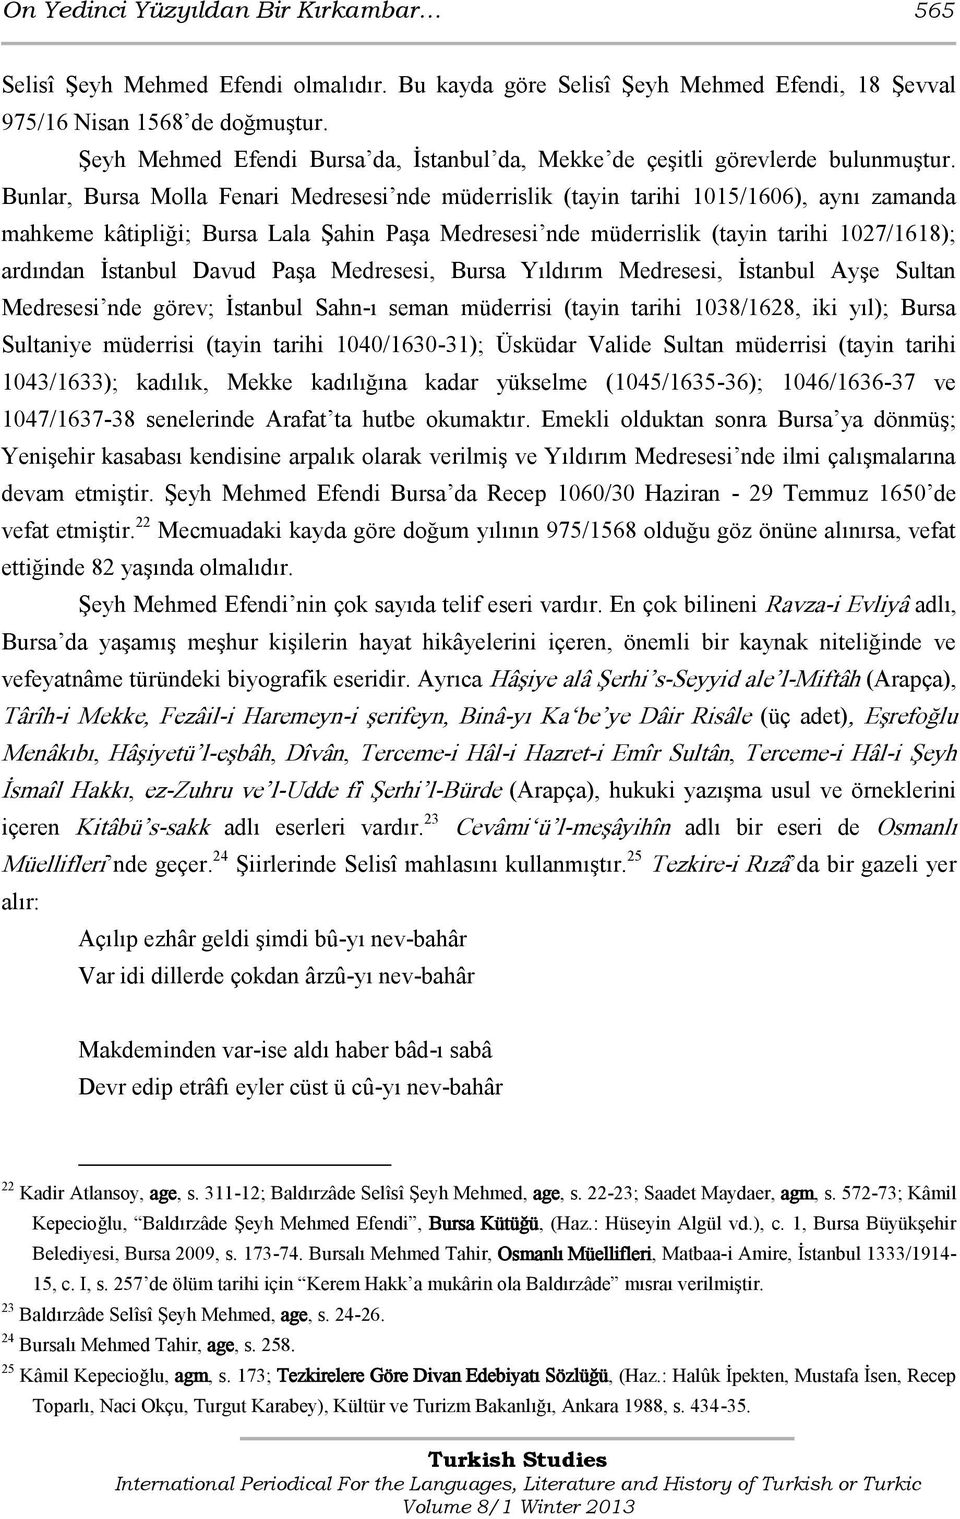 Bunlar, Bursa Molla Fenari Medresesi nde müderrislik (tayin tarihi 1015/1606), aynı zamanda mahkeme kâtipliği; Bursa Lala Şahin Paşa Medresesi nde müderrislik (tayin tarihi 1027/1618); ardından